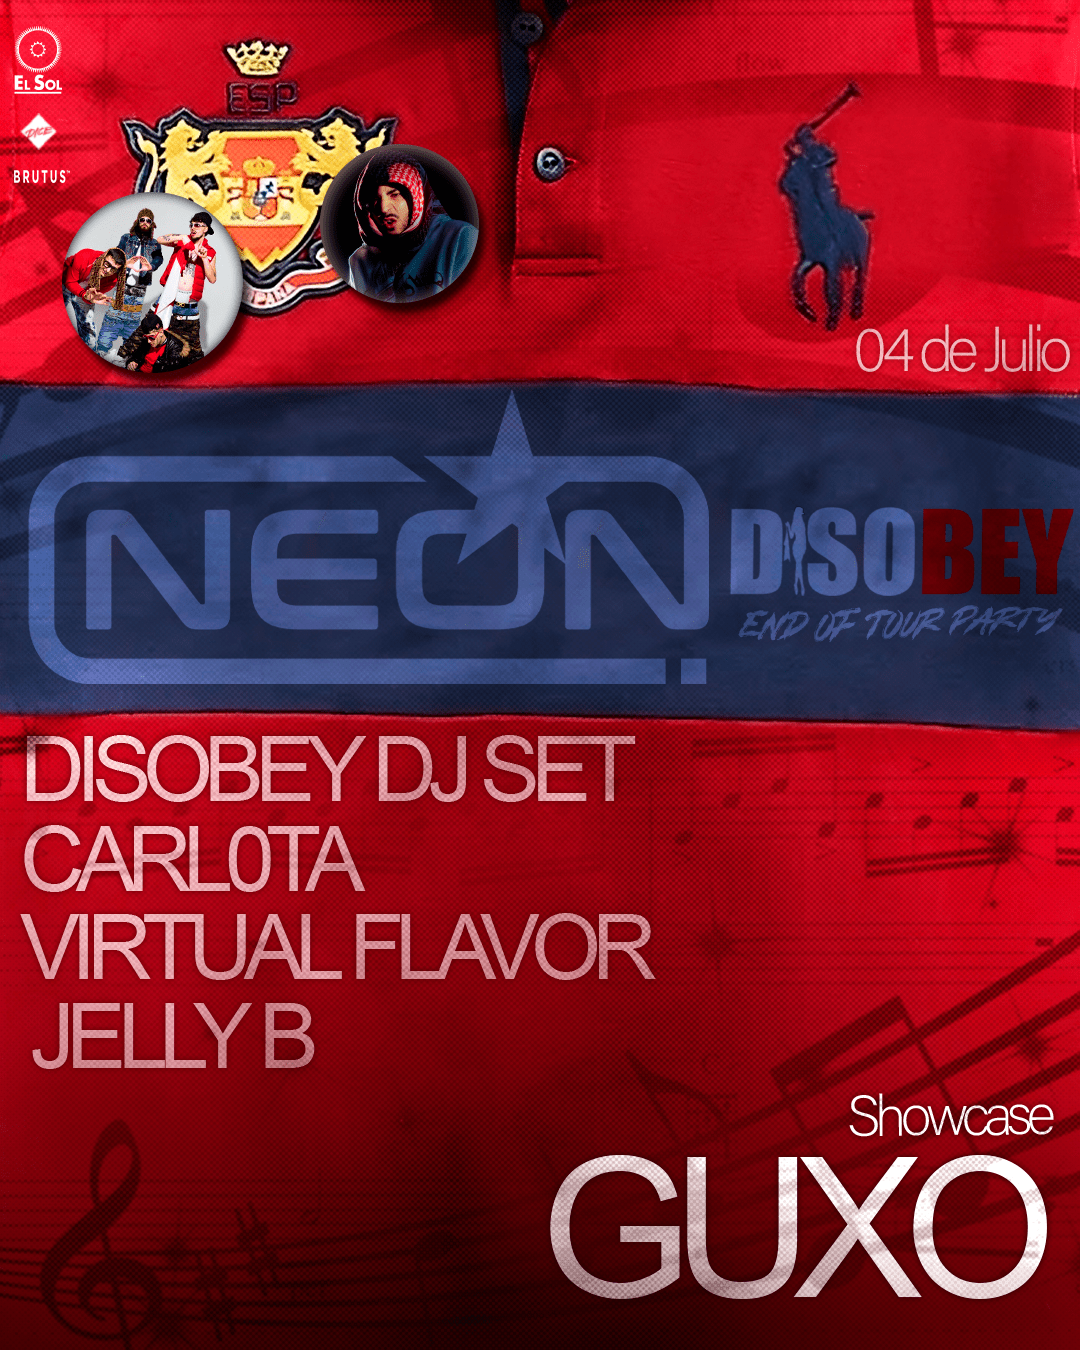 Neón StarClub presenta fiesta Disobey: Carl0ta + Jelly b + Virtual Flavour  + DisobeyDJset + Guxo (showcase)